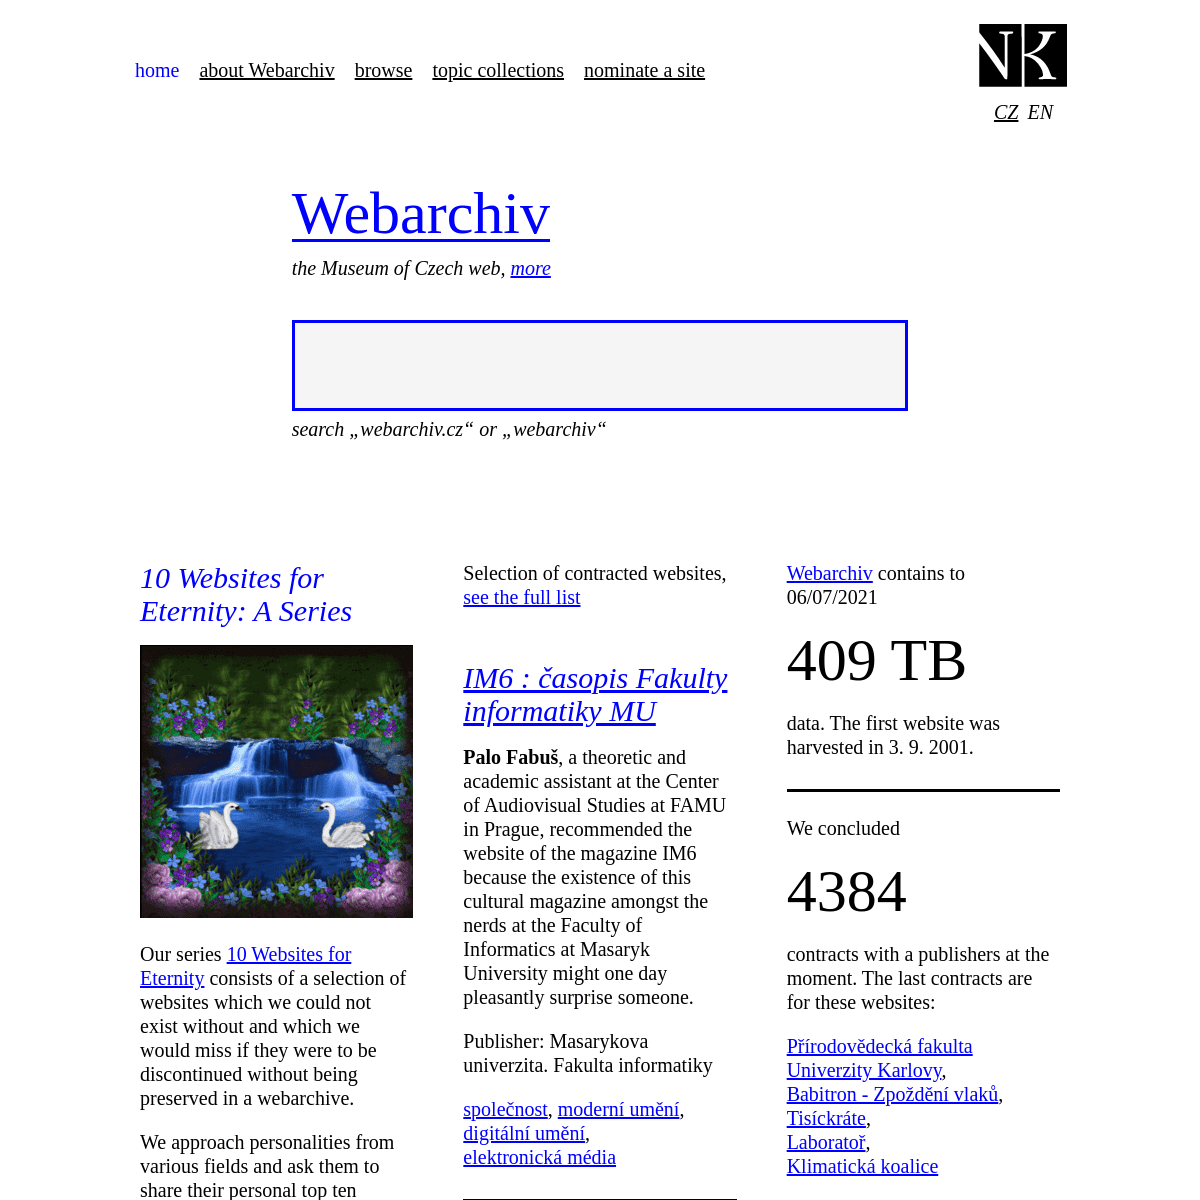 A complete backup of https://webarchiv.cz